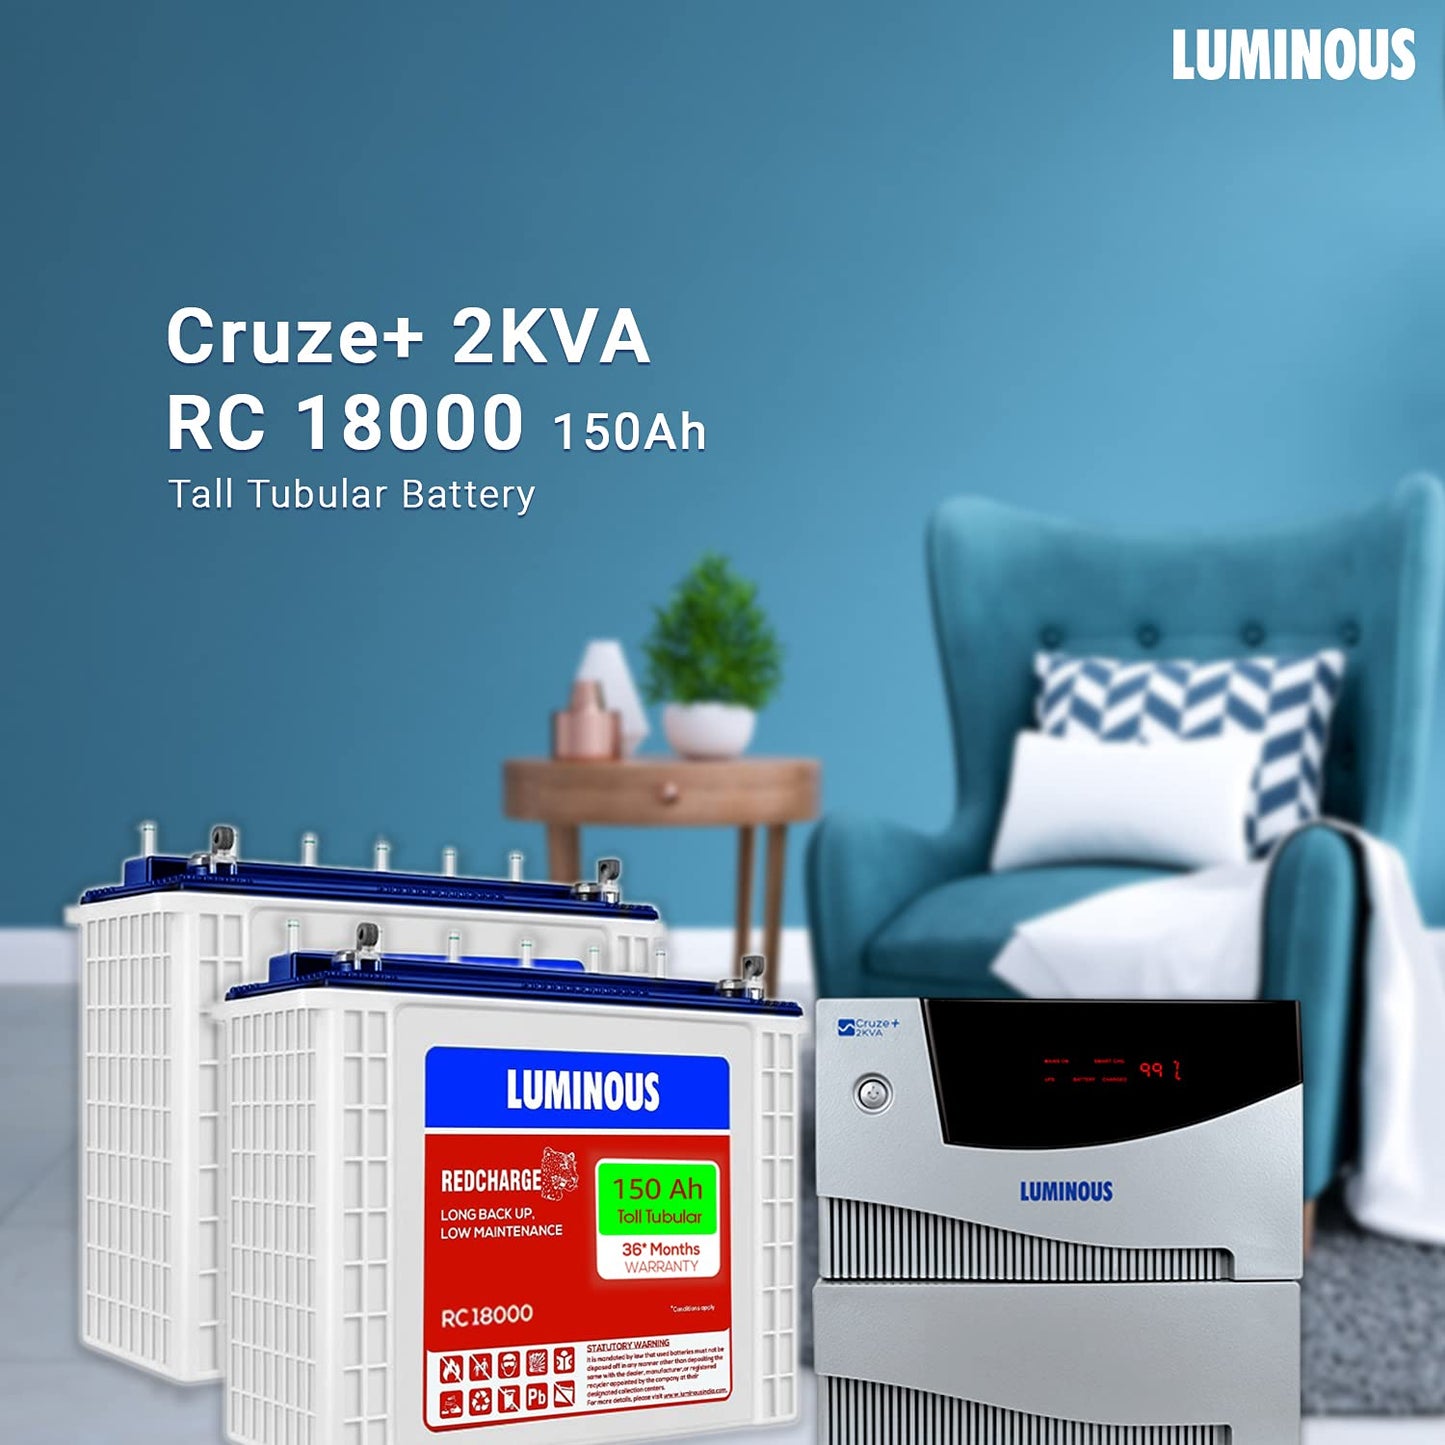 Luminous Cruze+ 2KVA Pure Sine Wave Inverter 2 Pieces RC18000 Tall Tubular Battery 150AH Battery